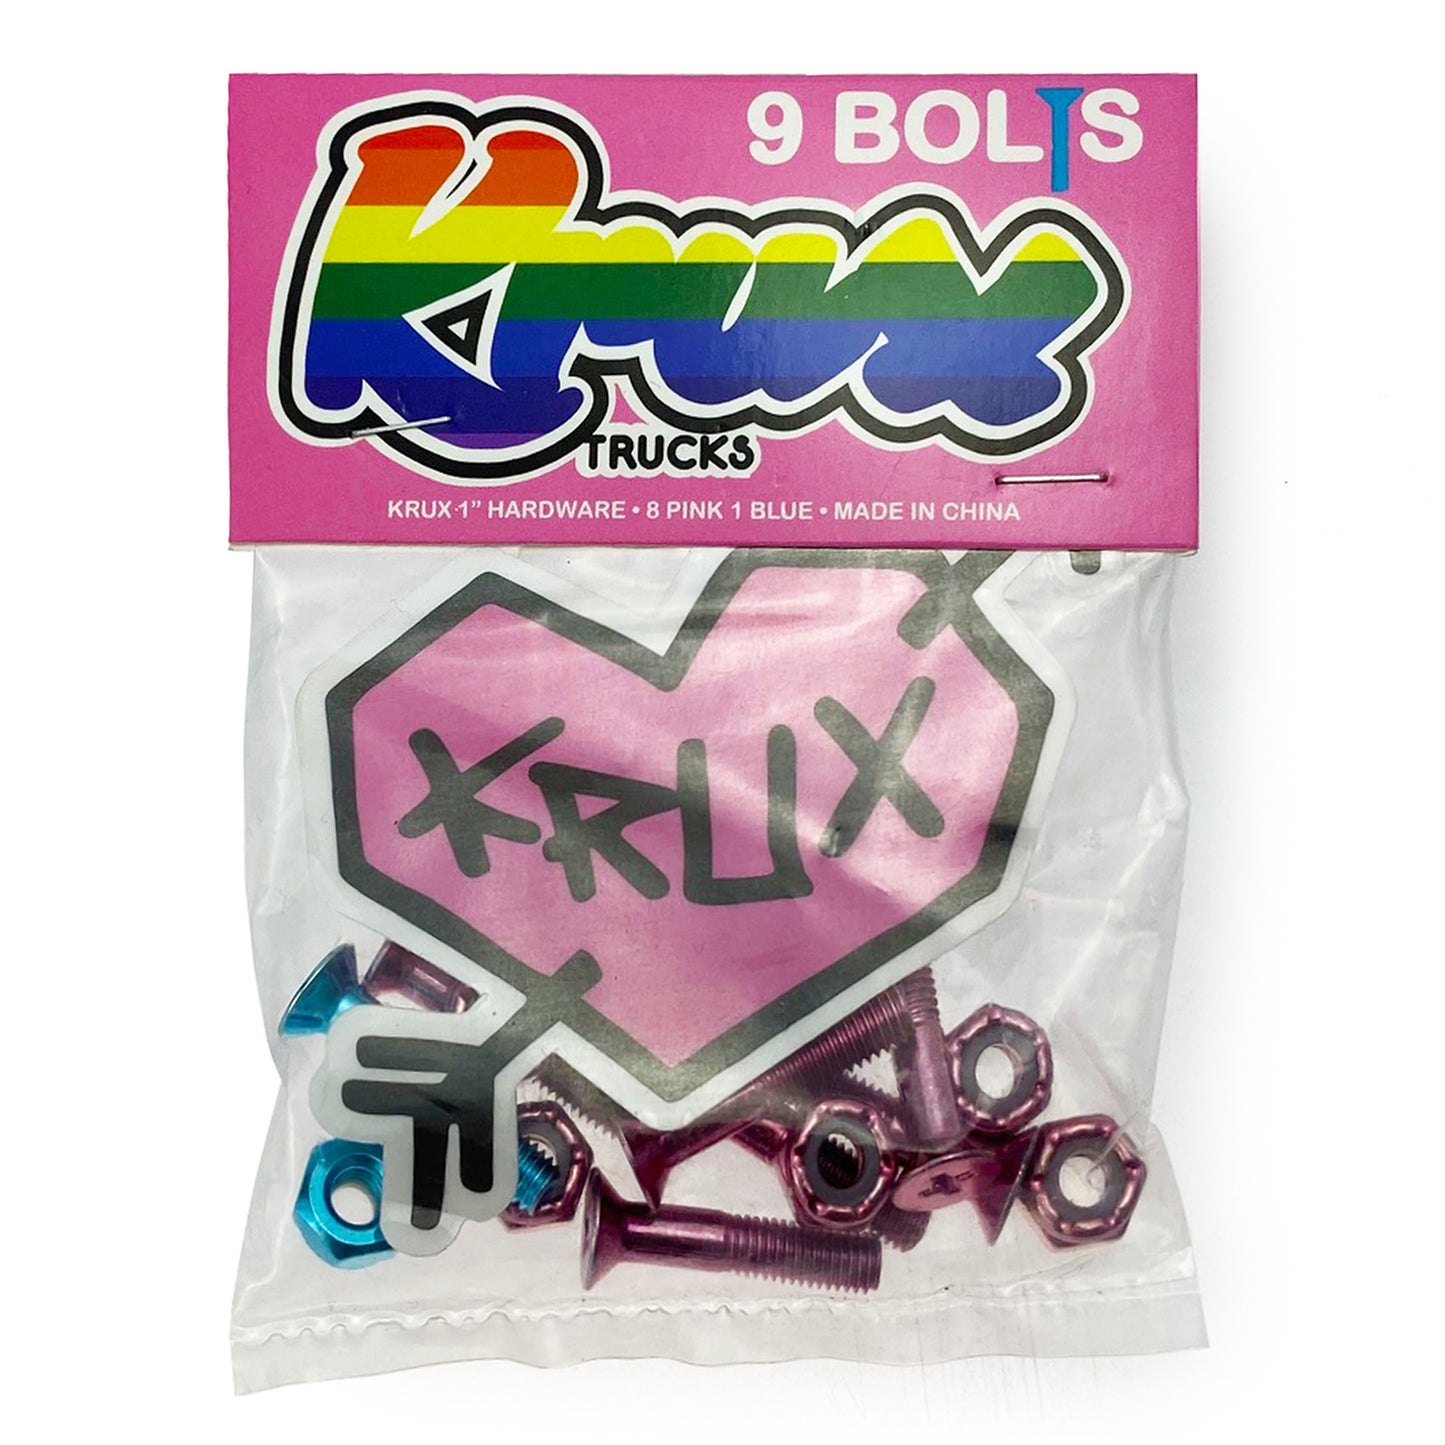 Krux 1" Phillips Hardware - Pink - Prime Delux Store